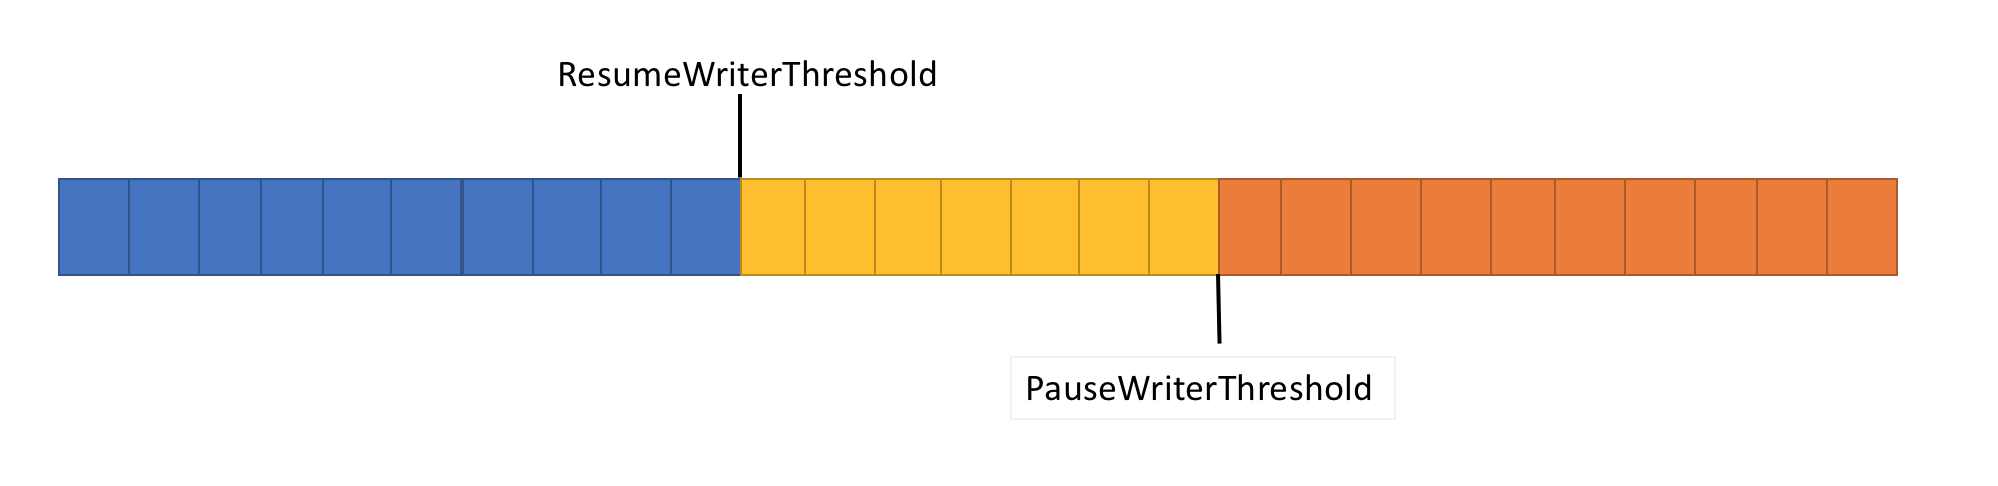 Diagram with ResumeWriterThreshold and PauseWriterThreshold